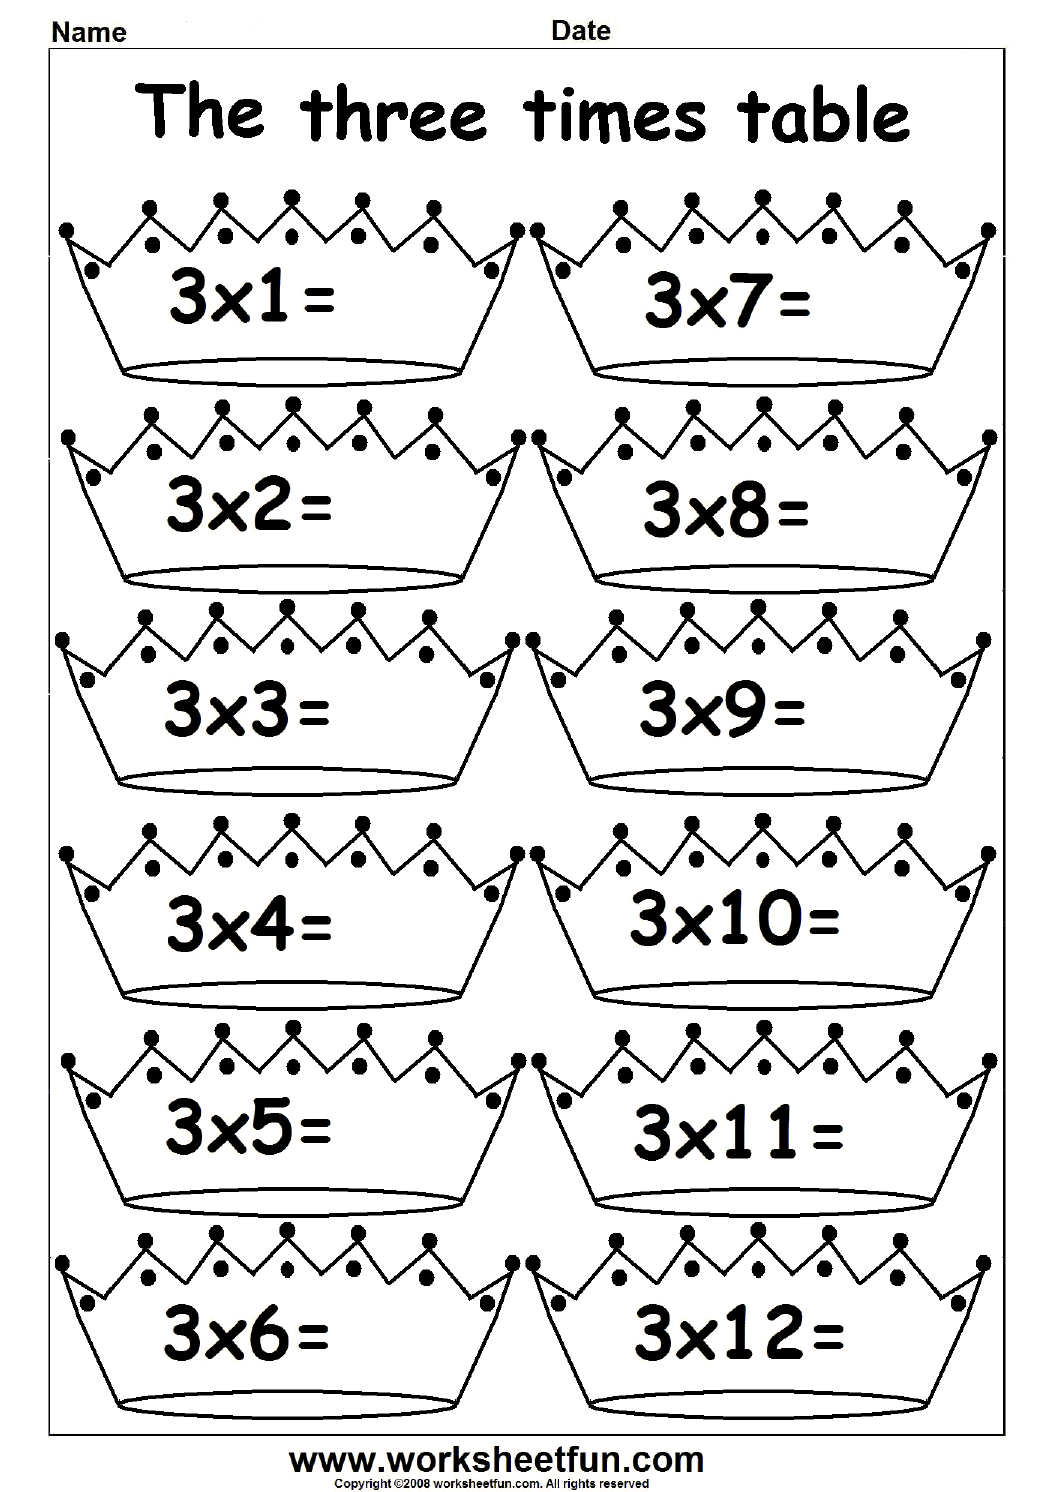 multiplication-times-tables-worksheets-2-3-4-6-7-8-9-10-11